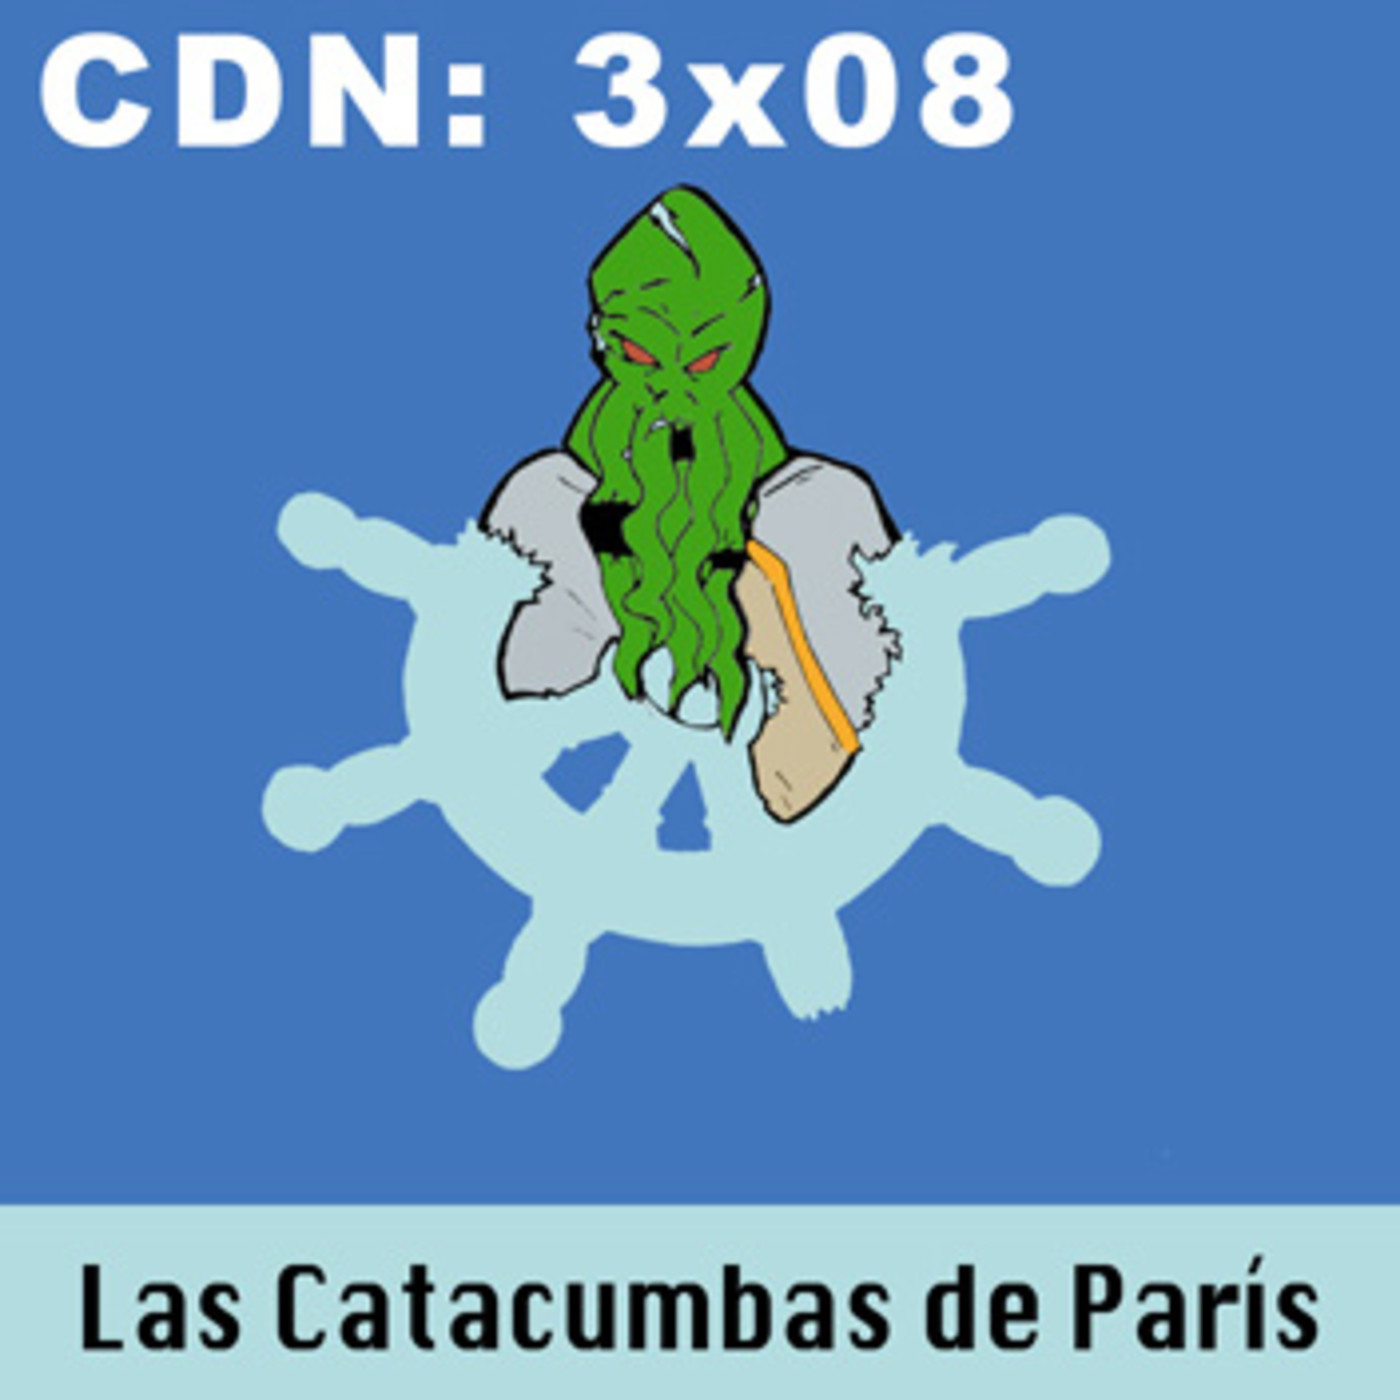 CdN 3x08 - Las Catacumbas de París